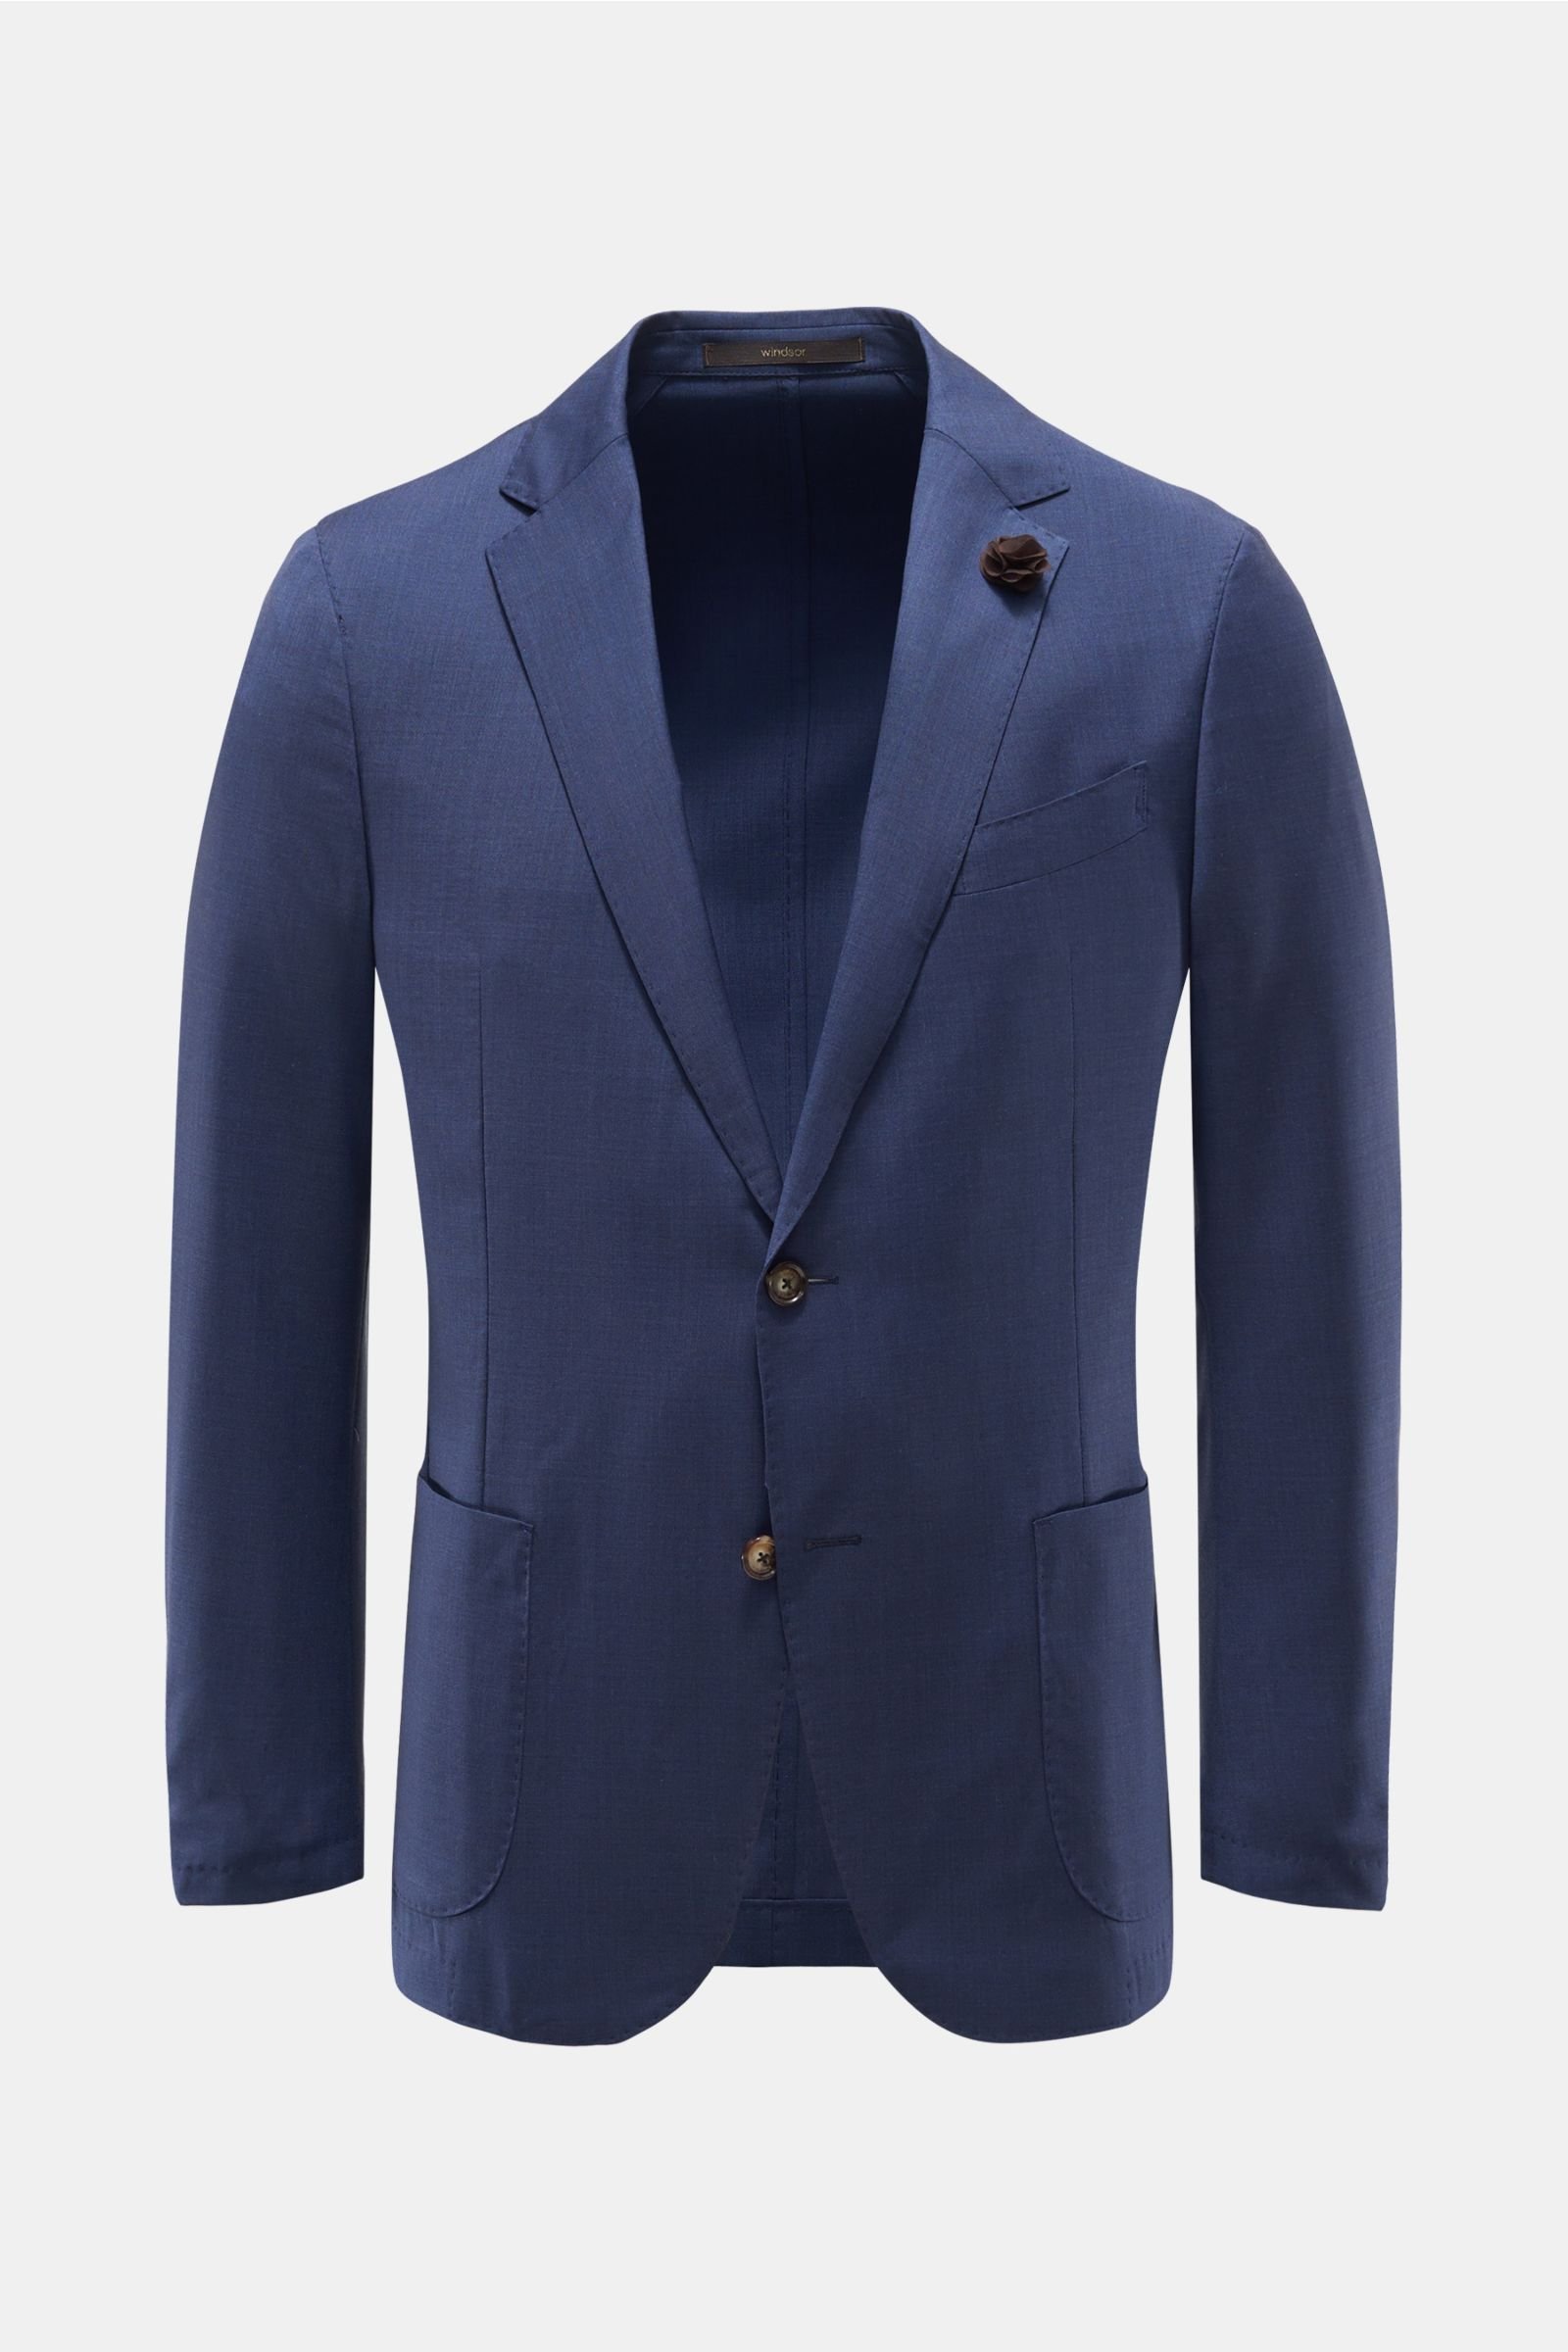 Smart-casual jacket 'Travel' dark blue